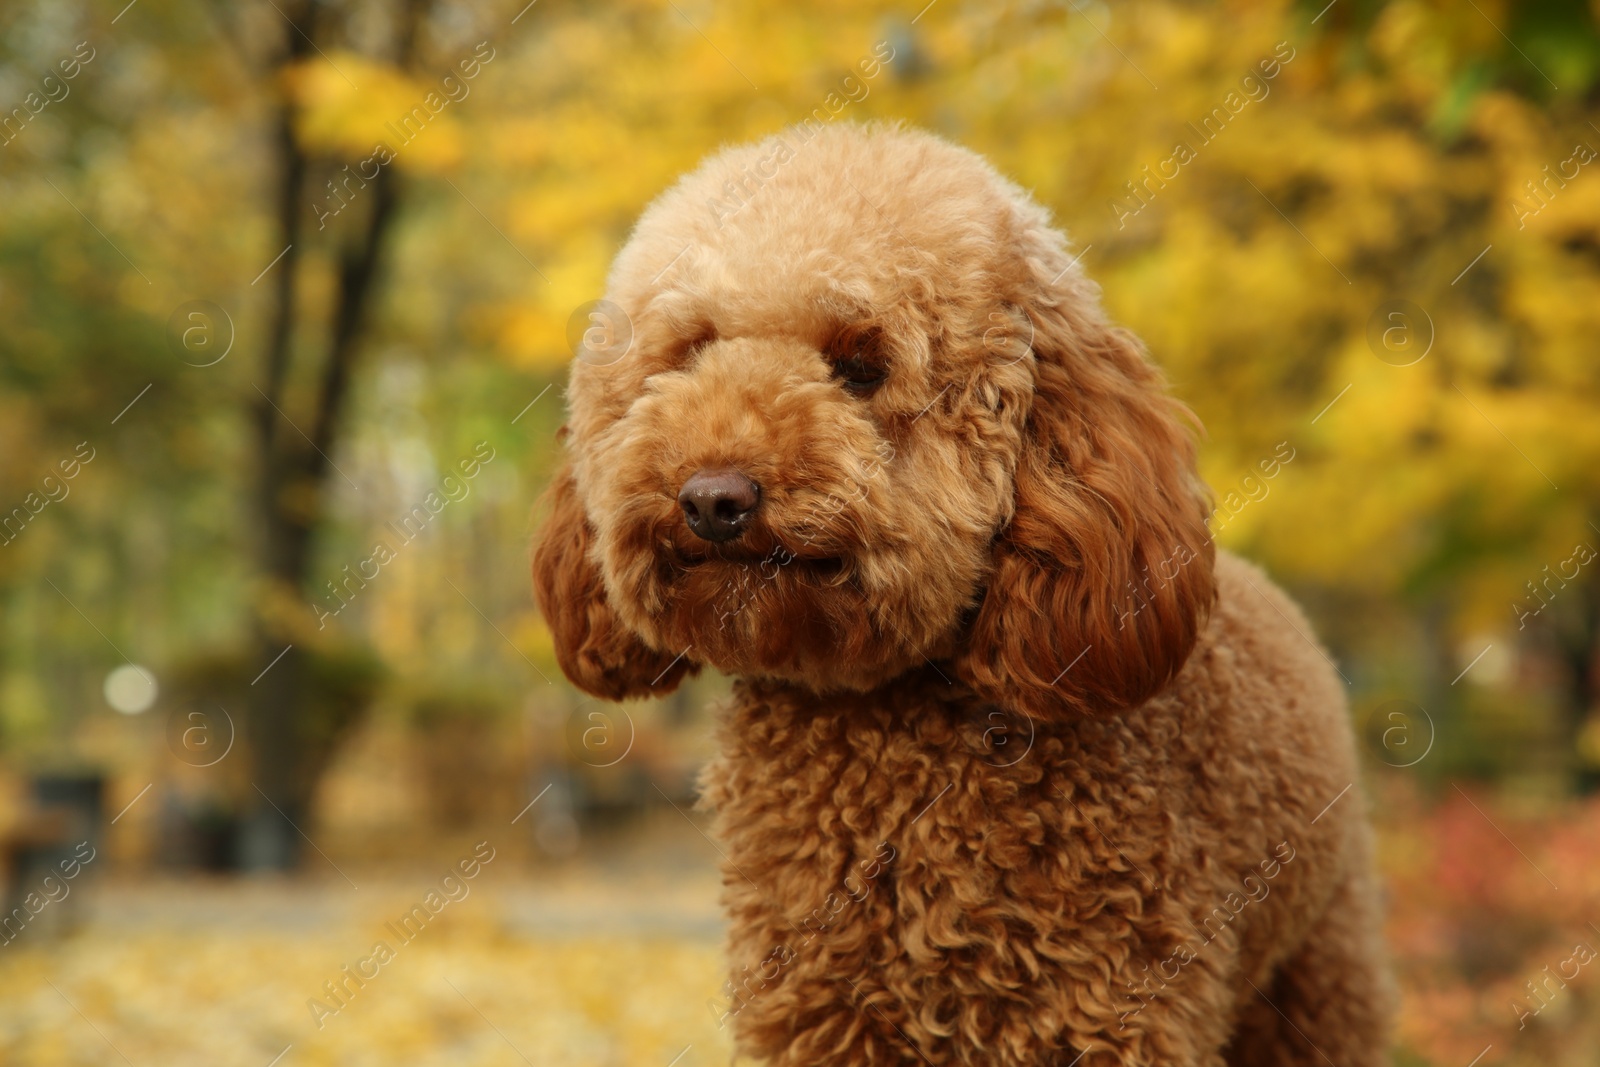 Photo of Cute dog in autumn park, closeup view